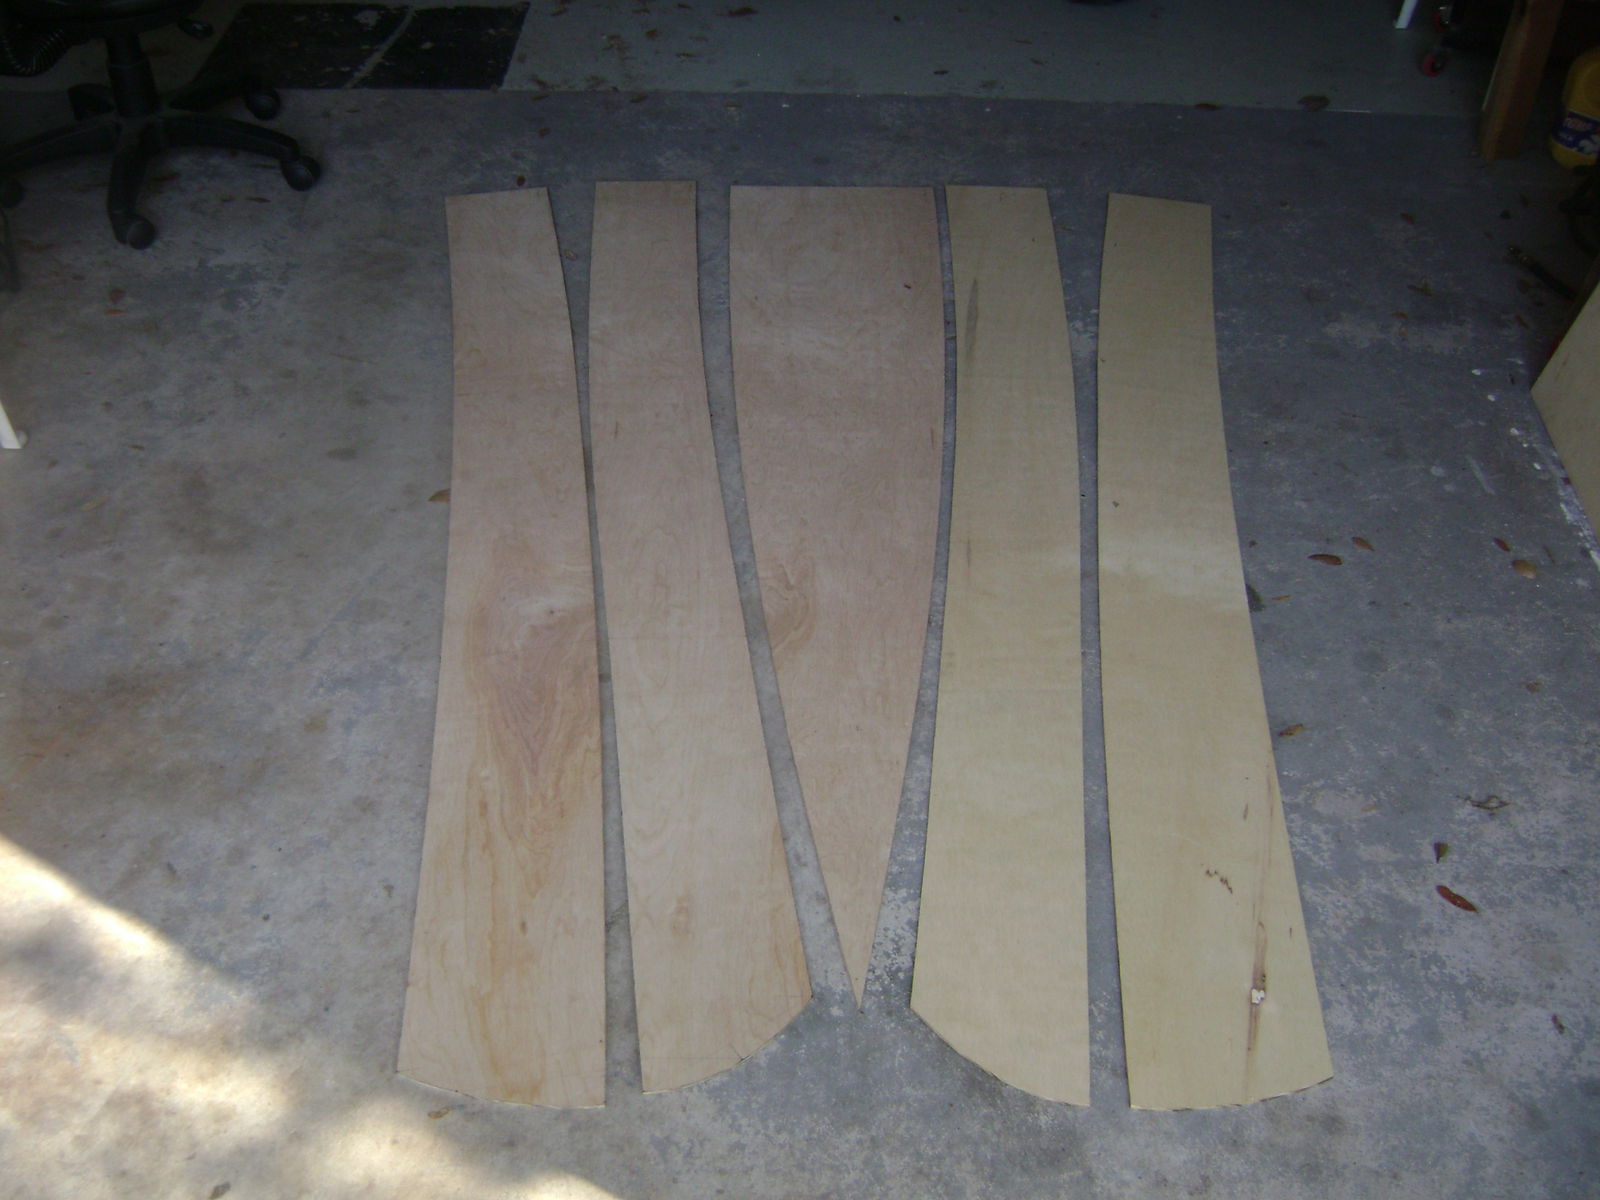 HC12
cut panels
